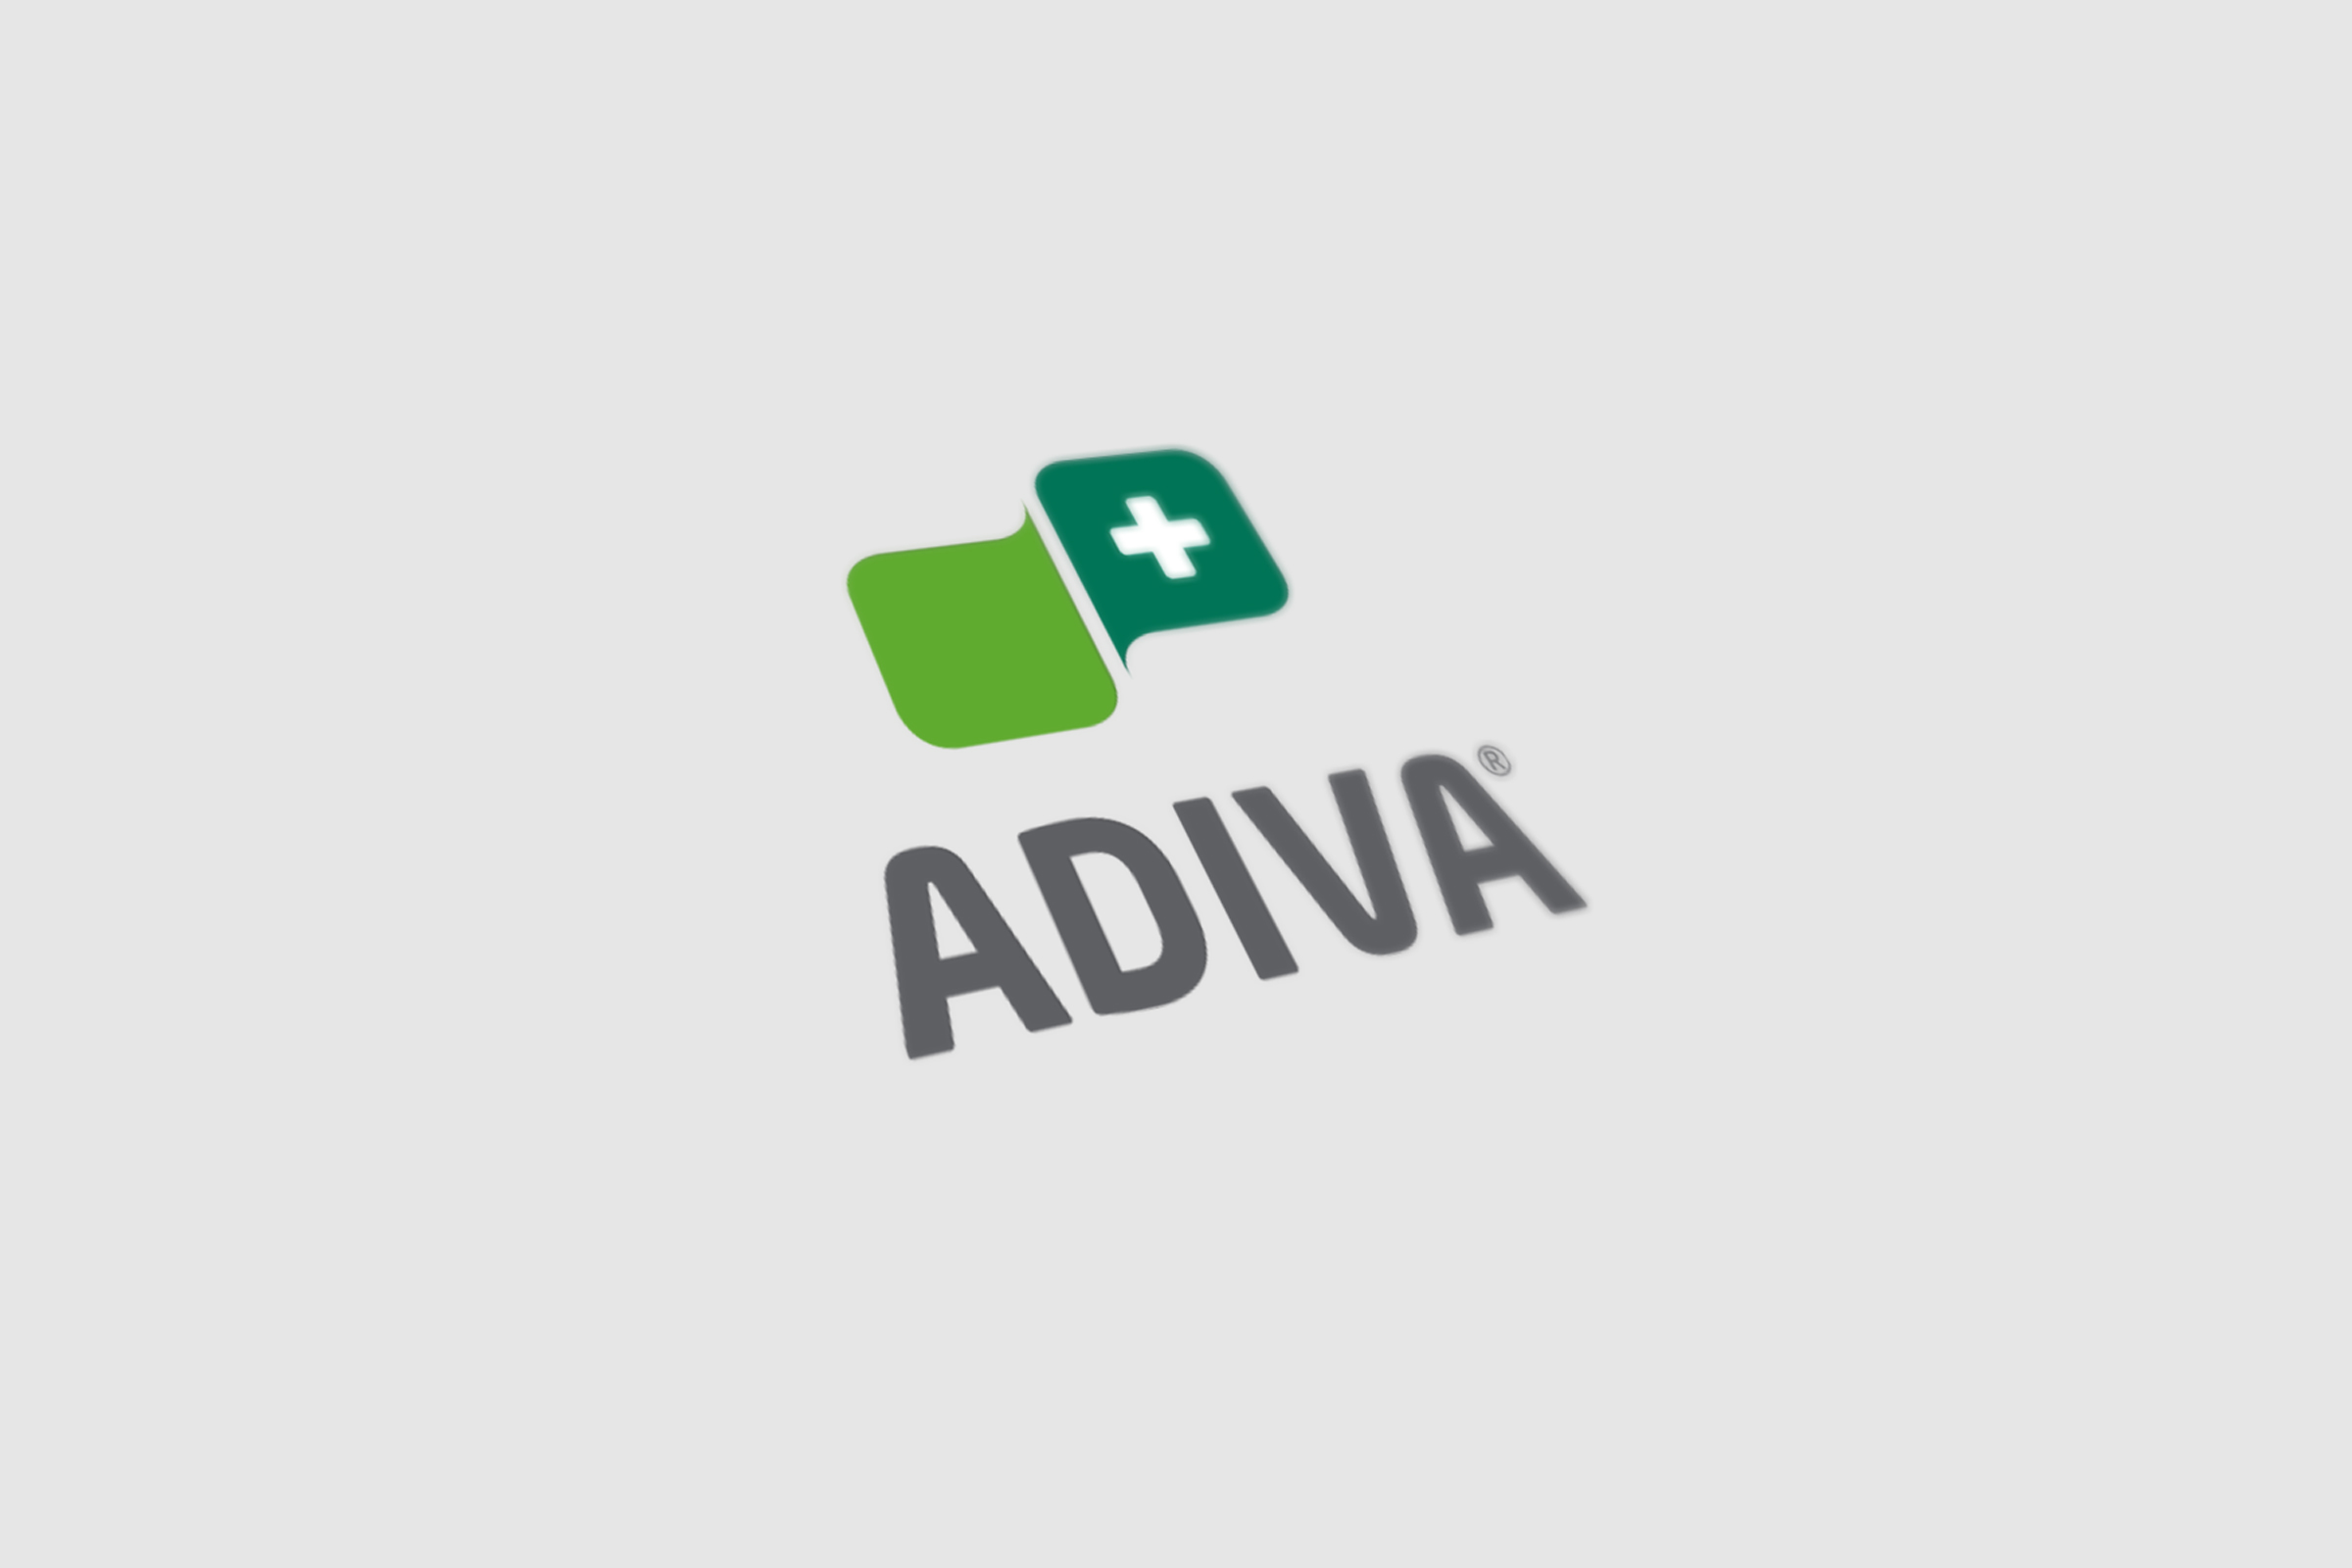 Visual identity and brand naming for ADIVA